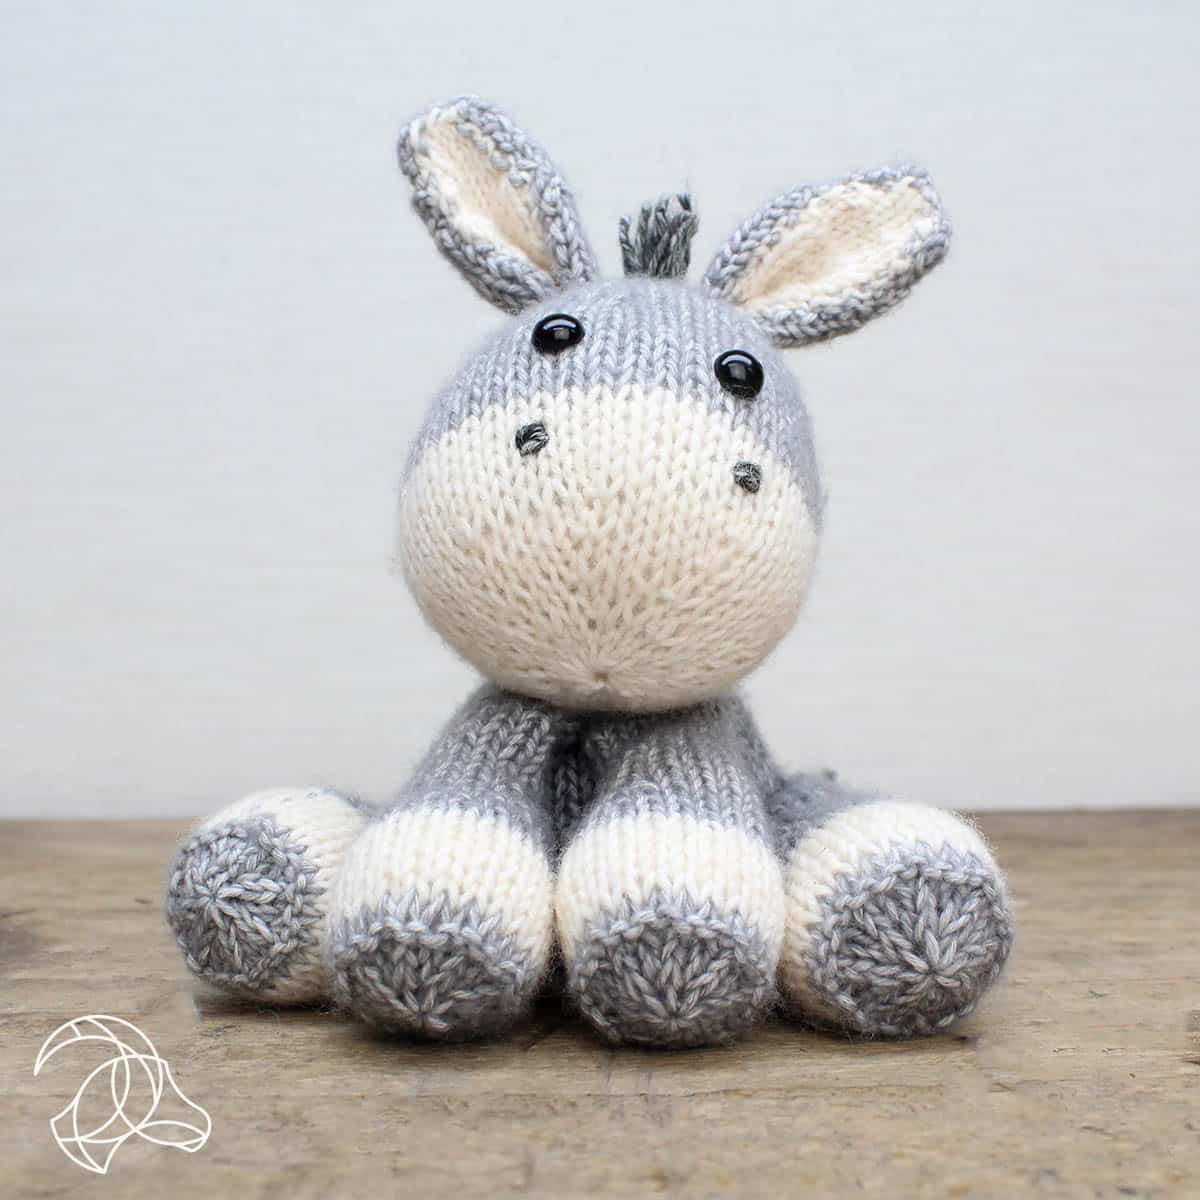 Lente the Donkey - Delightful Knitting Kit from Hardicraft